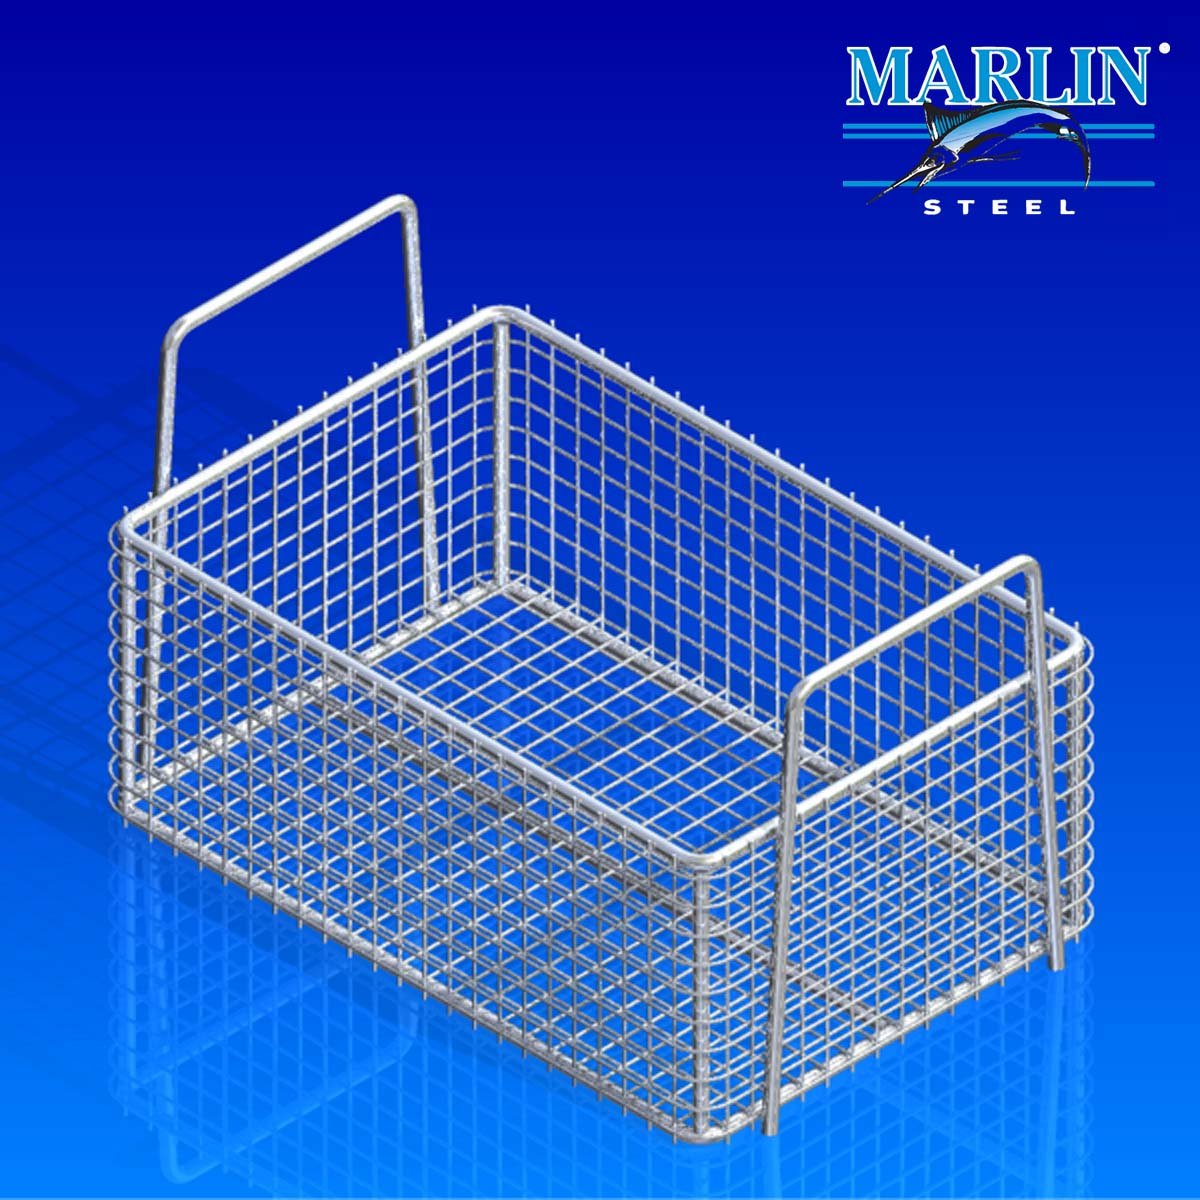 Marlin Steel Basket with Handles 725001